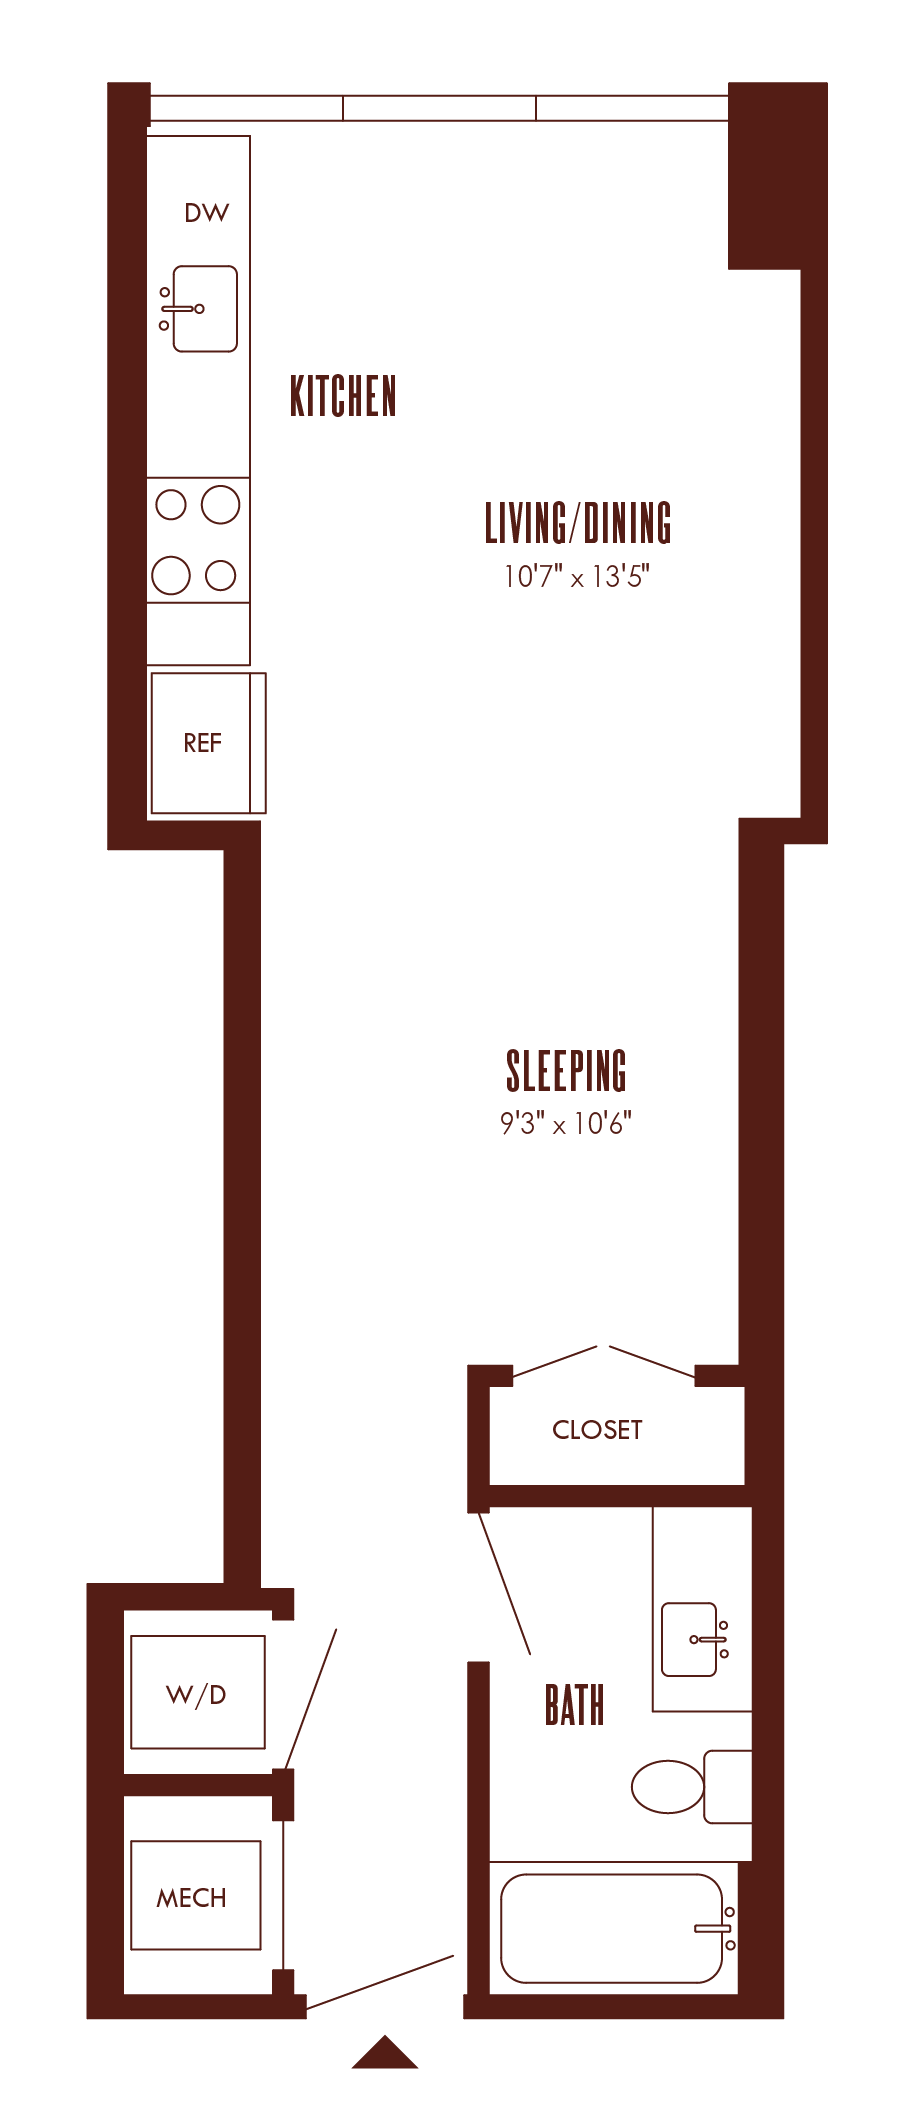 Floor Plan Image of Apartment Apt 13J